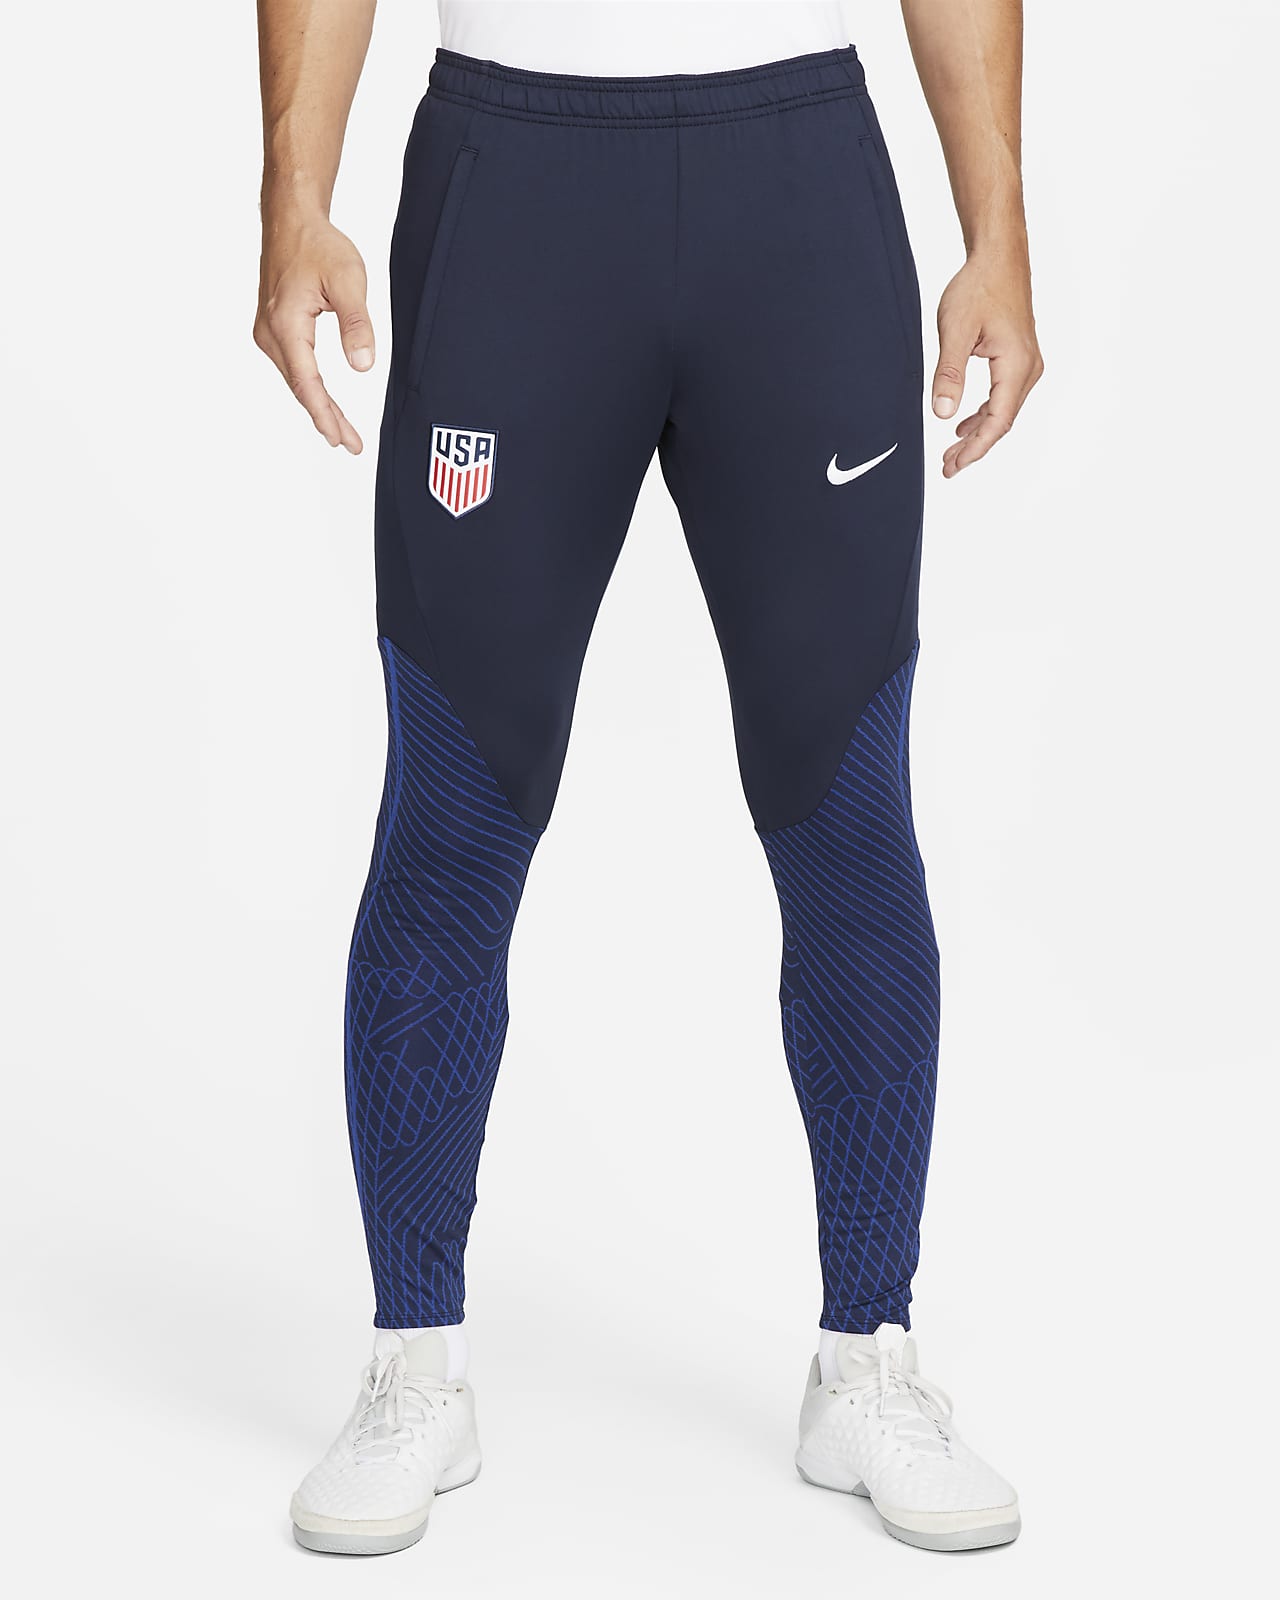 Pants de fútbol de tejido Knit para hombre Nike Dri-FIT U.S. Strike